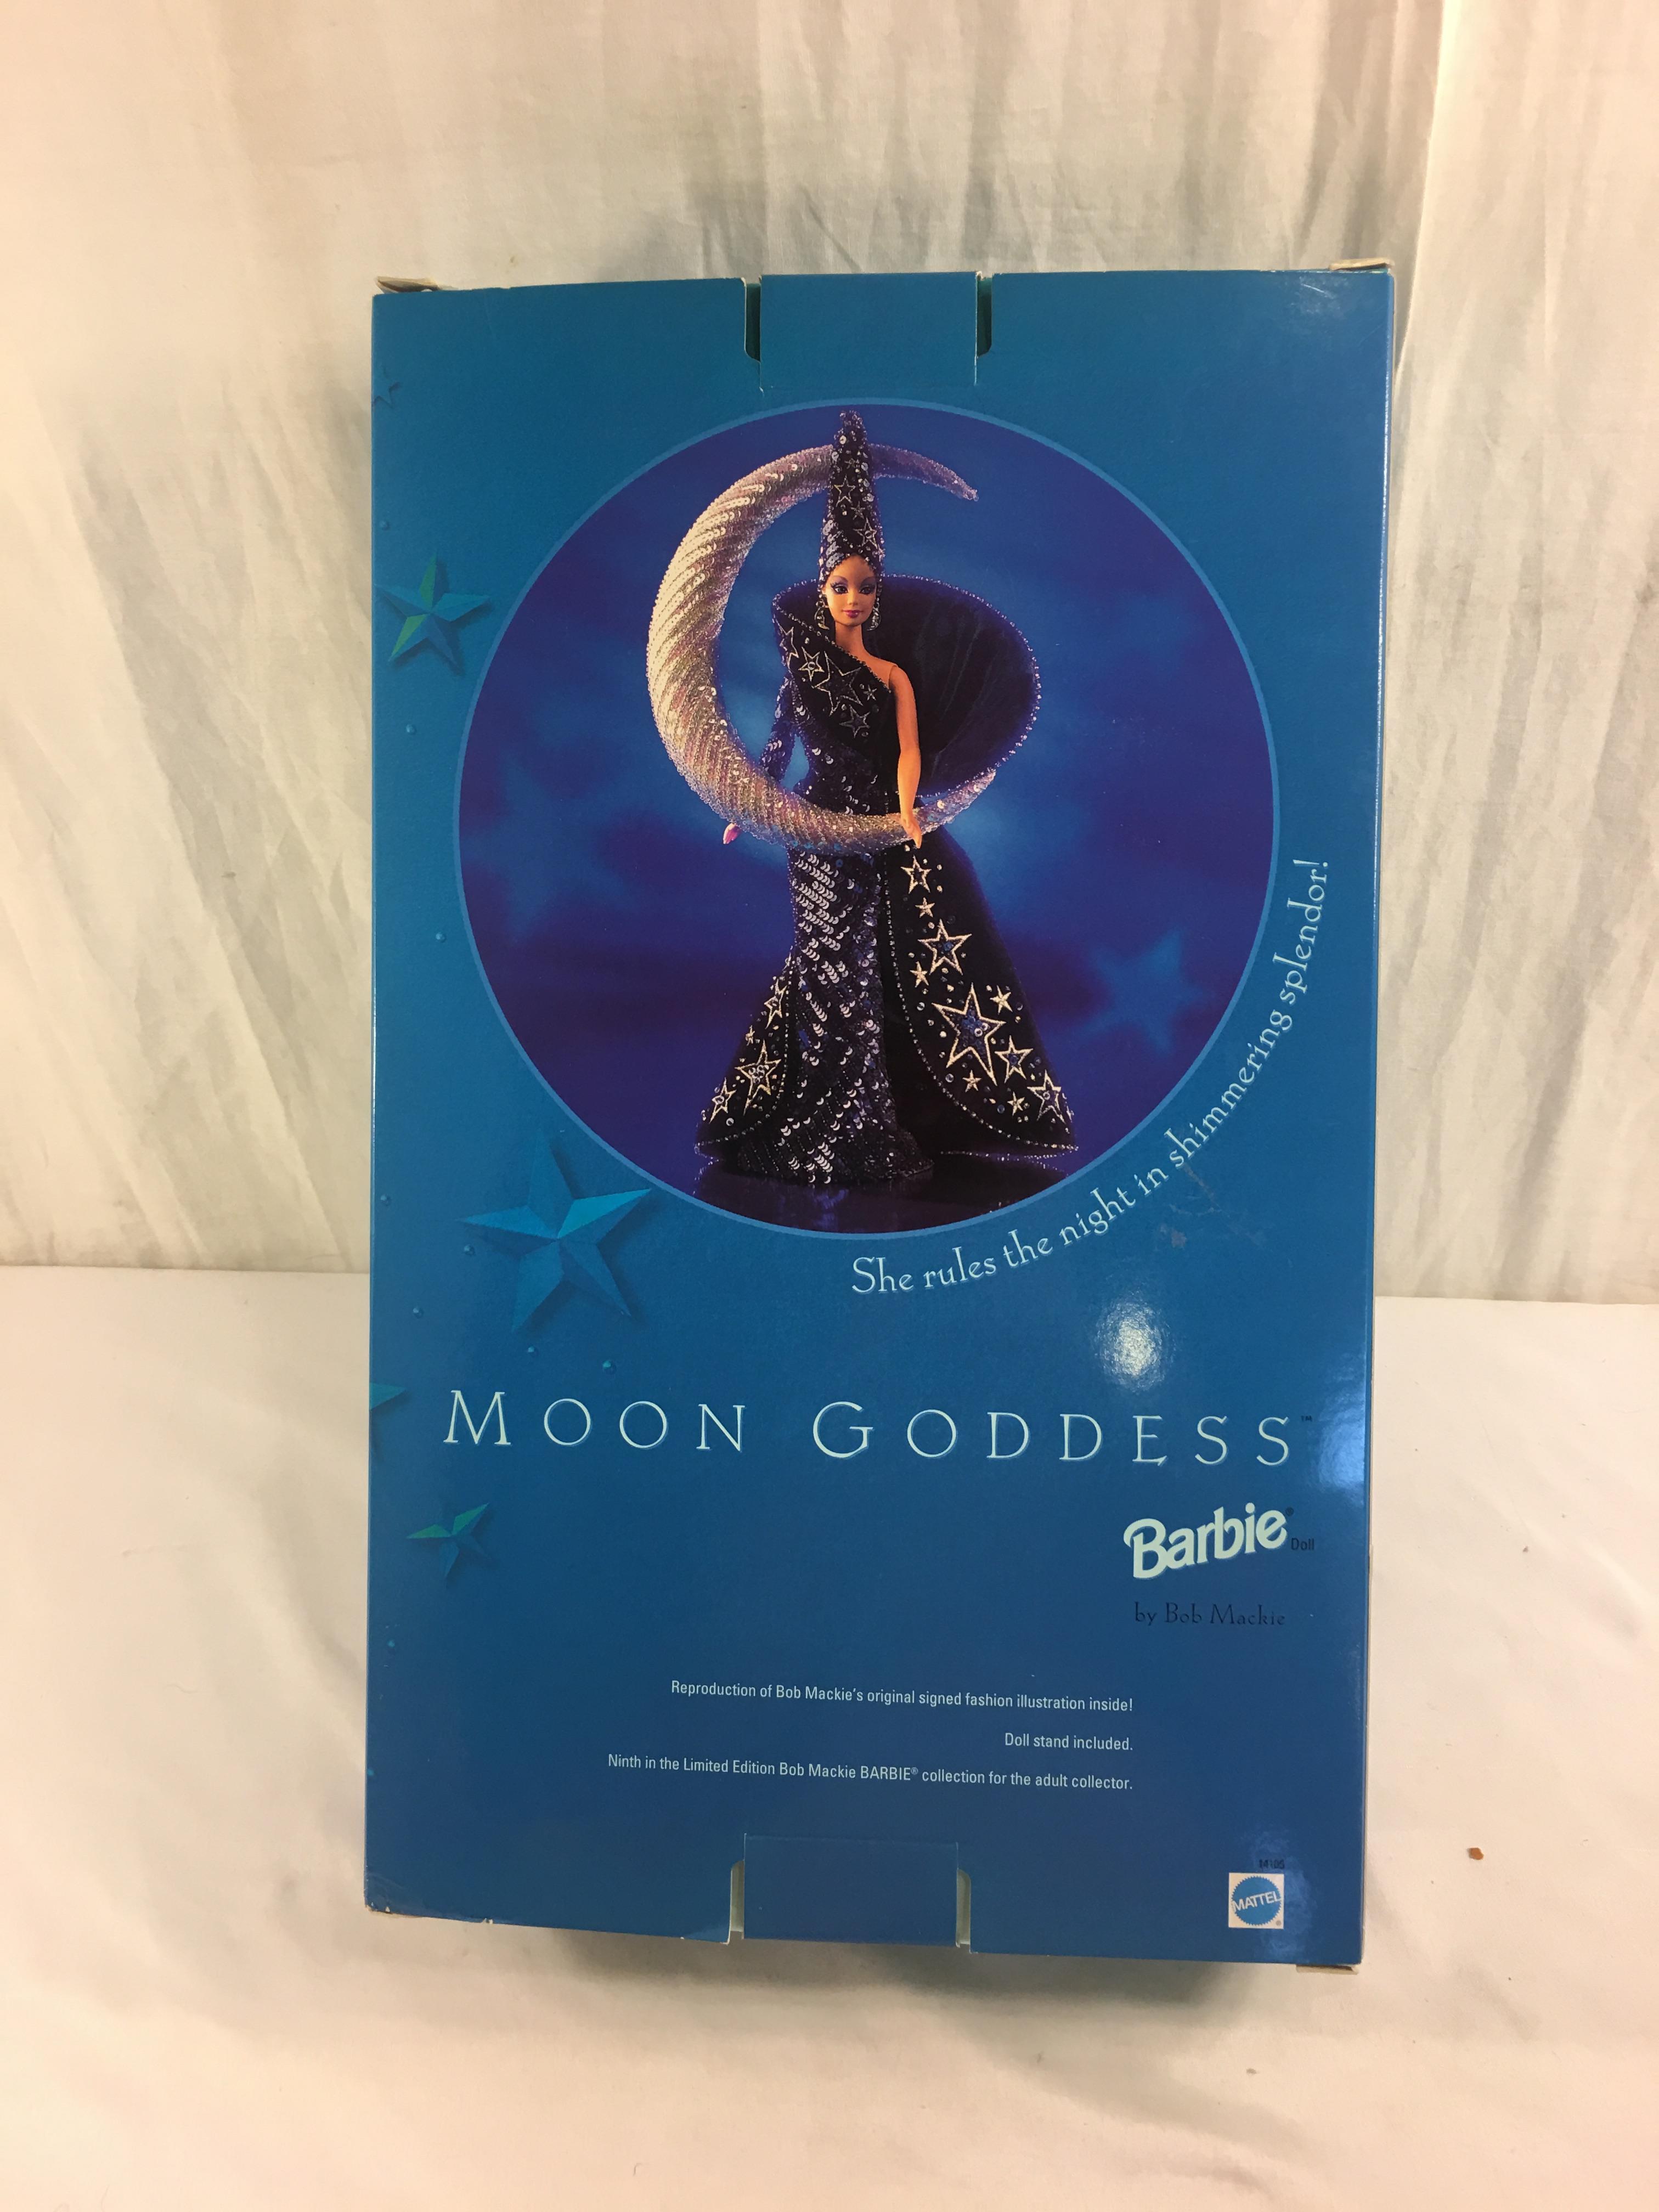 Collector Barbie Moon Goddess Barbie By Bob Mackie Barbie Mattel Doll 15"tall Box